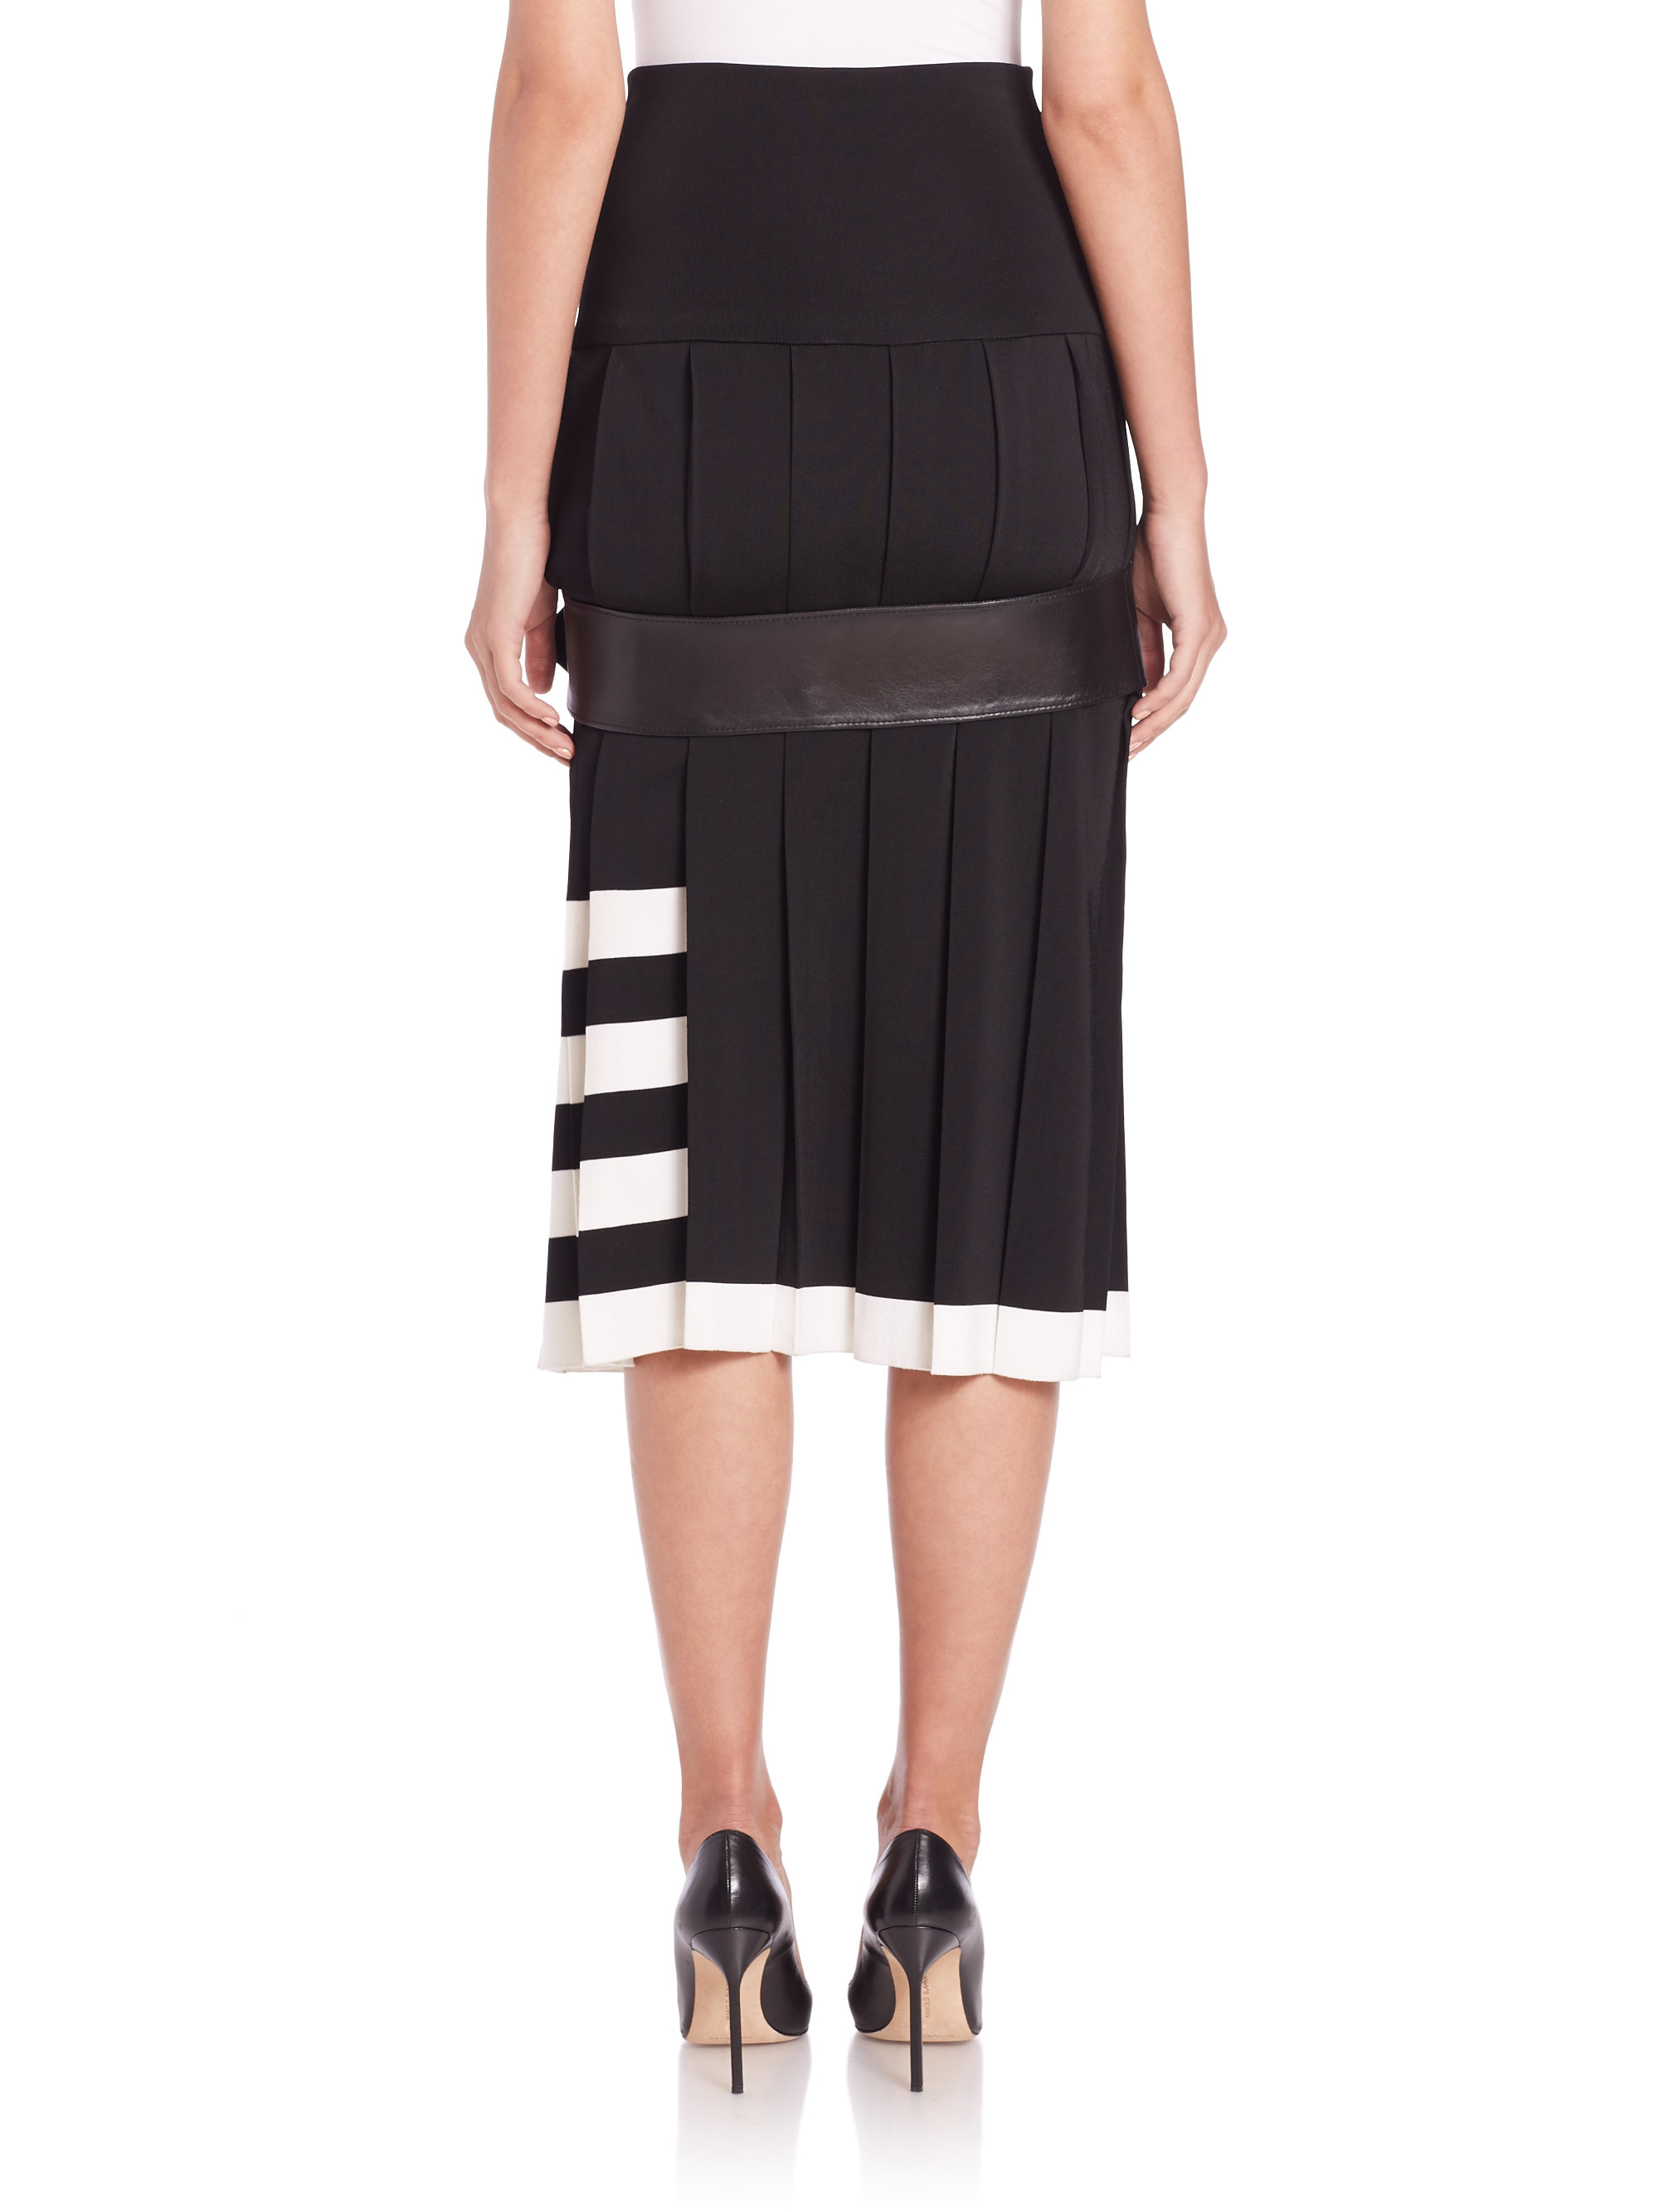 Lyst - Calvin Klein Wilton Pleated Striped Pencil Skirt in Black